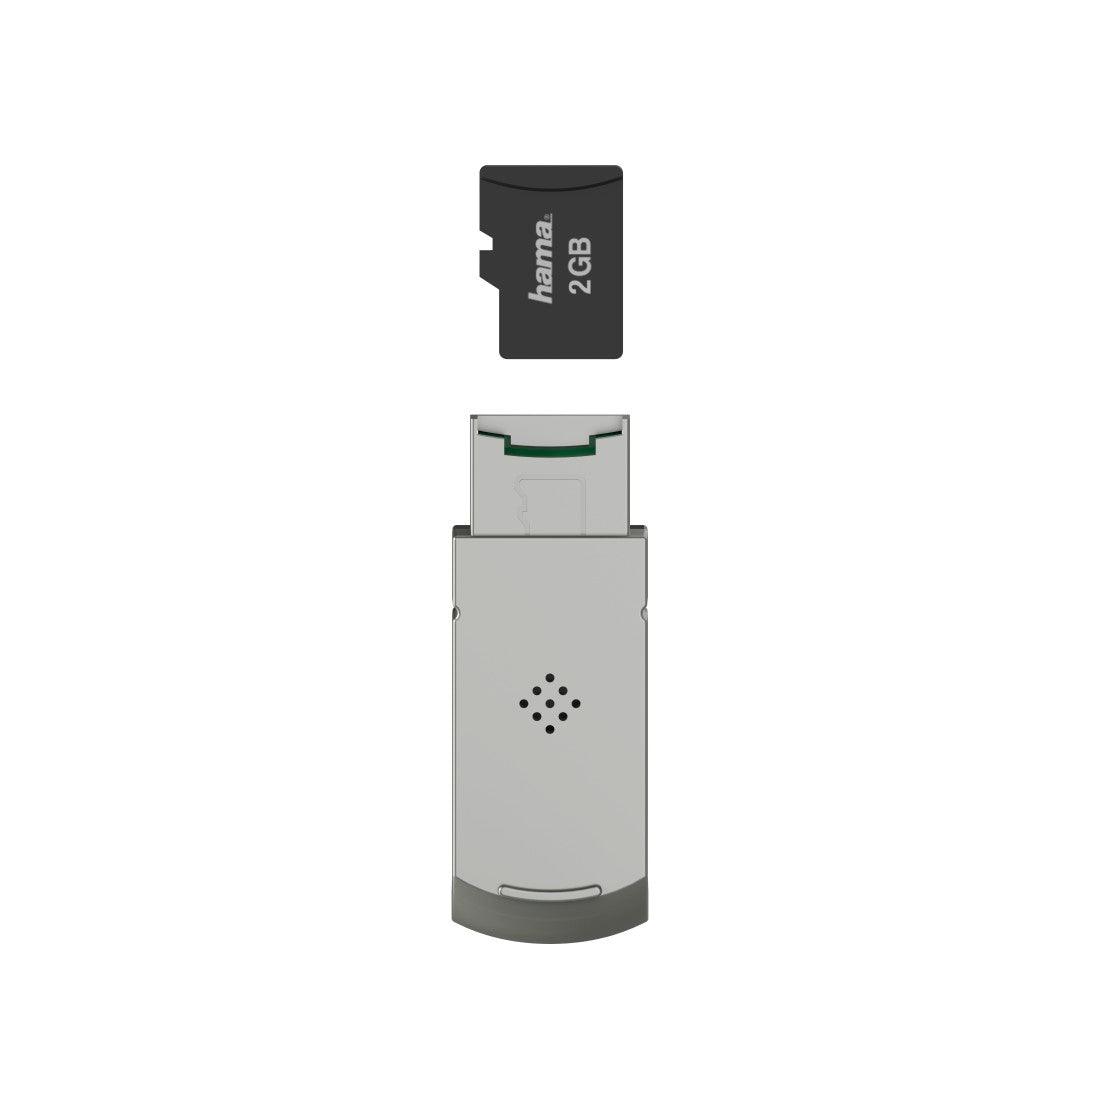 Hama Spot-Pointer Wireless Presenter Digital Laser Pointer  - Black | 456144 (7521221574844)